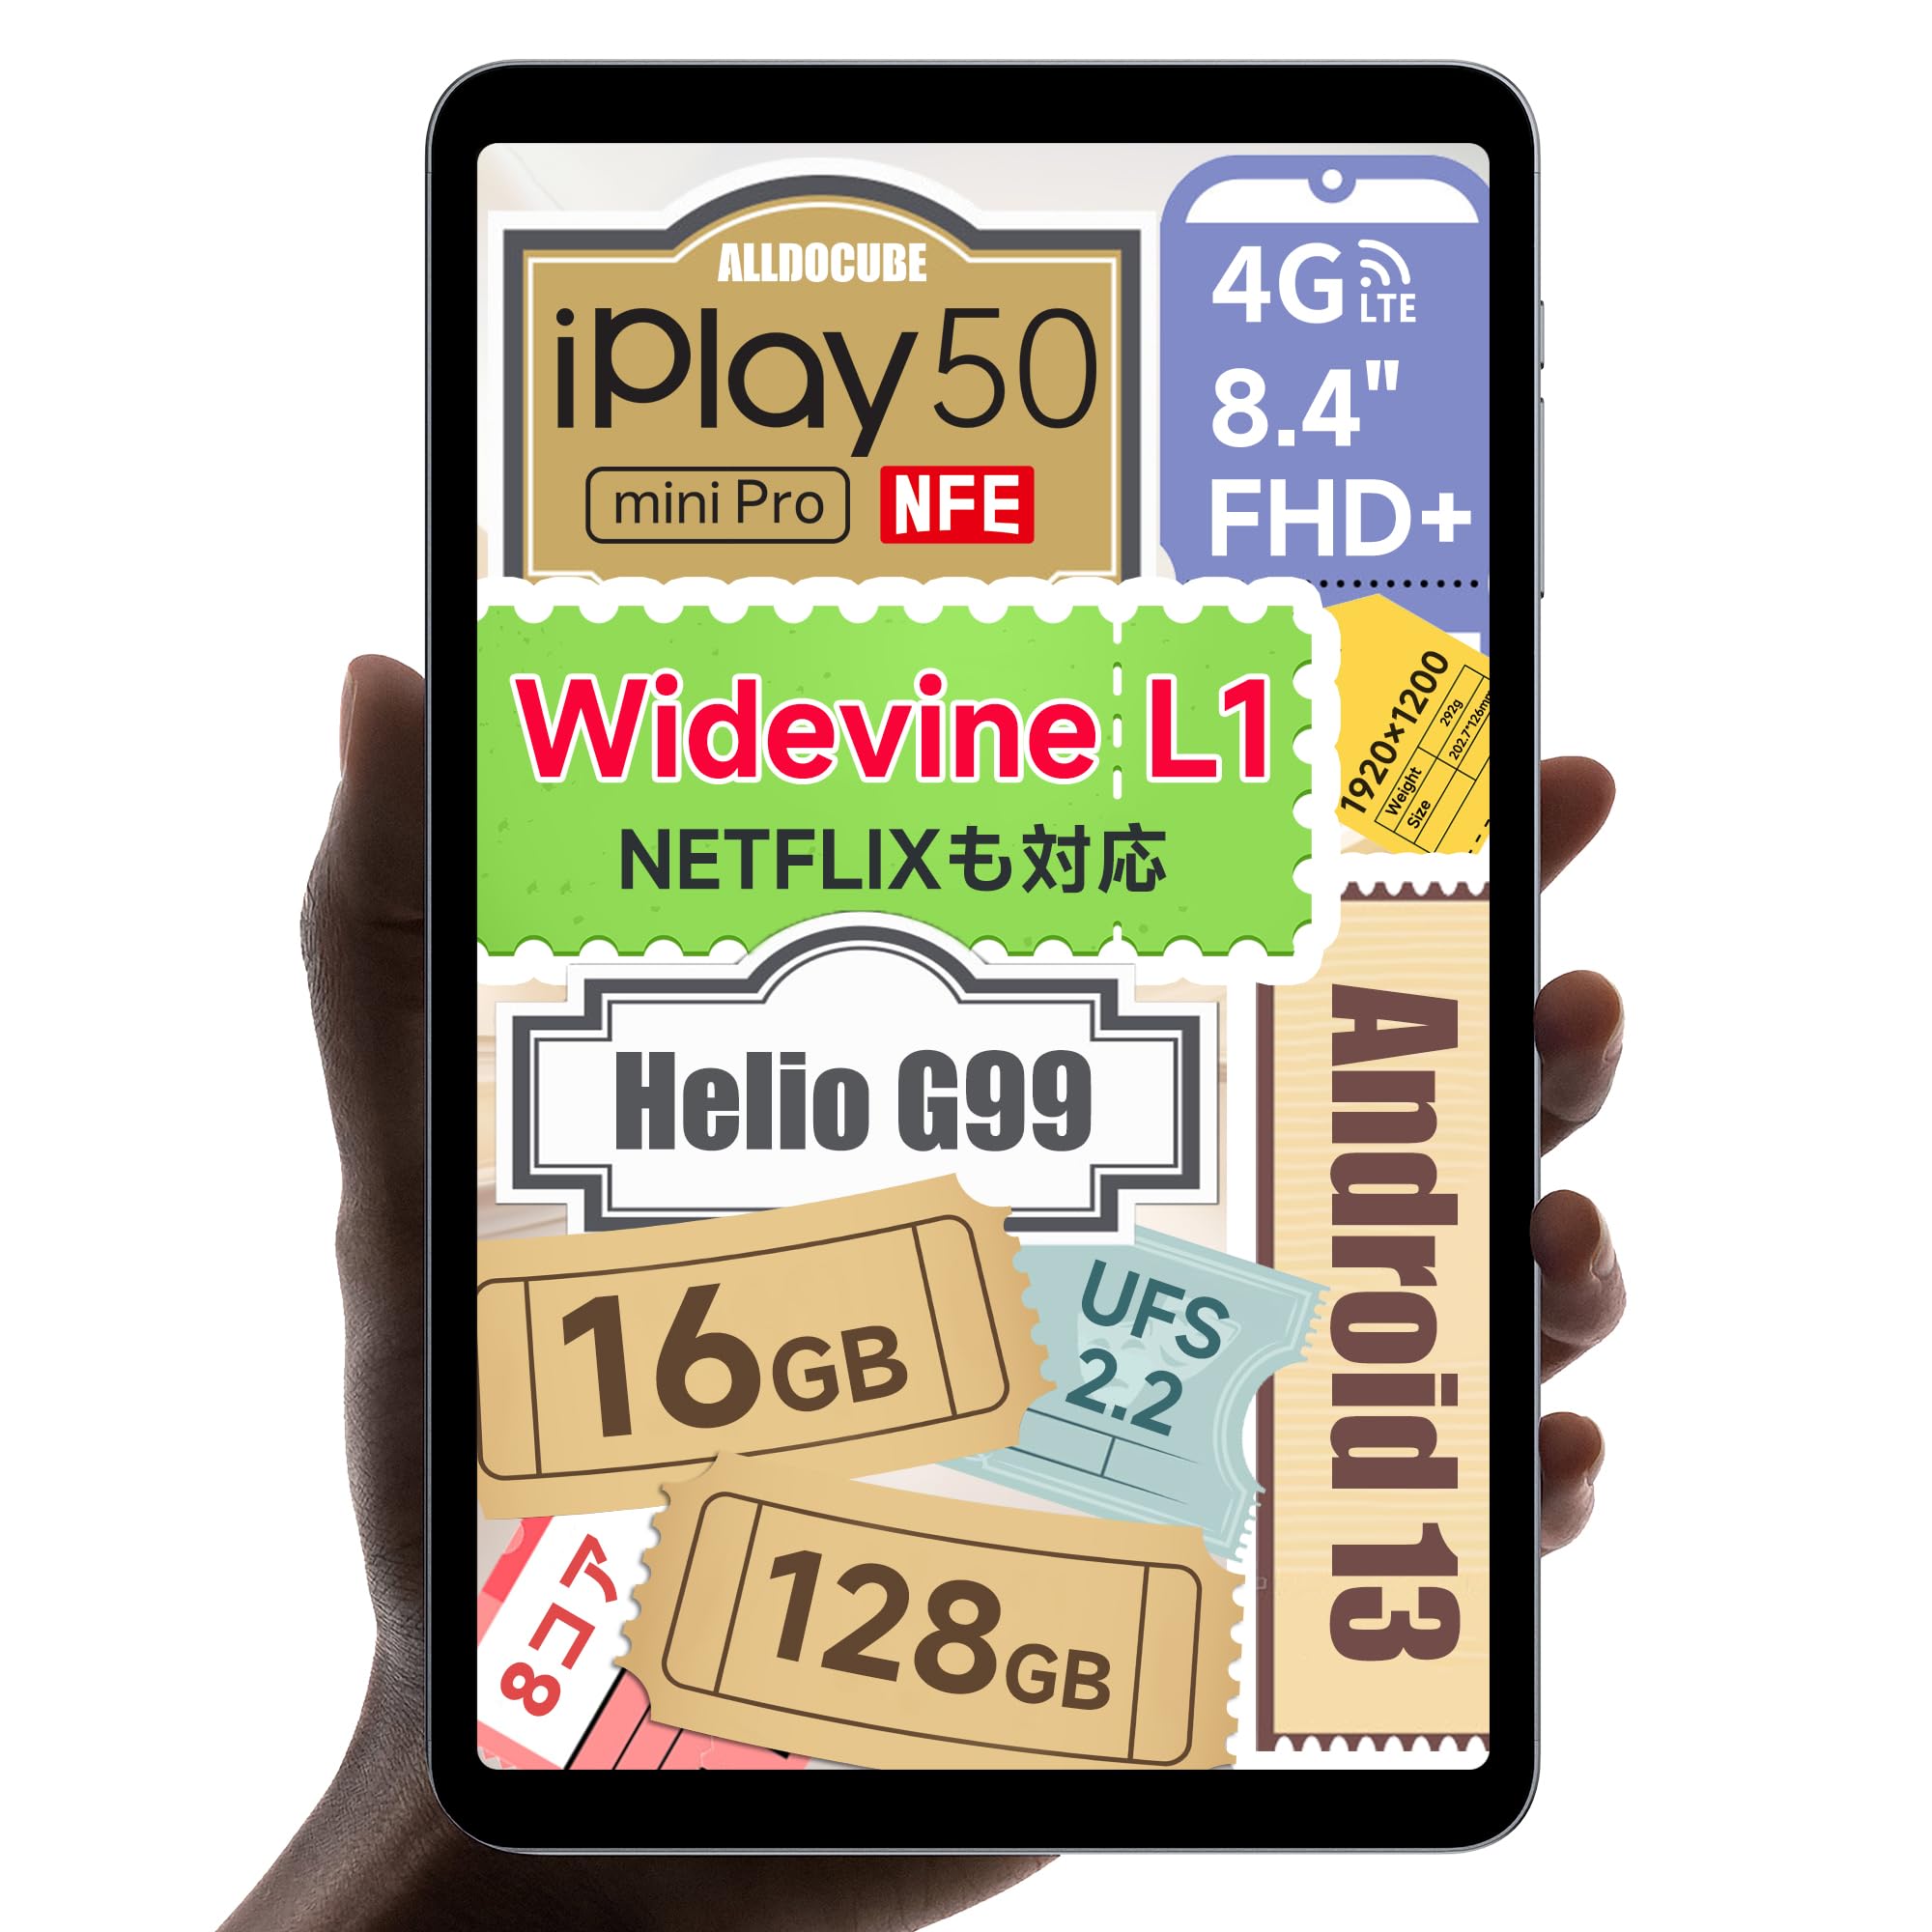 ALLDOCUBE iPlay50mini Pro NFE 8.4インチタブレット Helio G99 8コアCPU WidevineL1 1920×1200FHD+ In-Cellディスプレイ 16GB(8+8仮想) 128GB UFS2.2 Andro